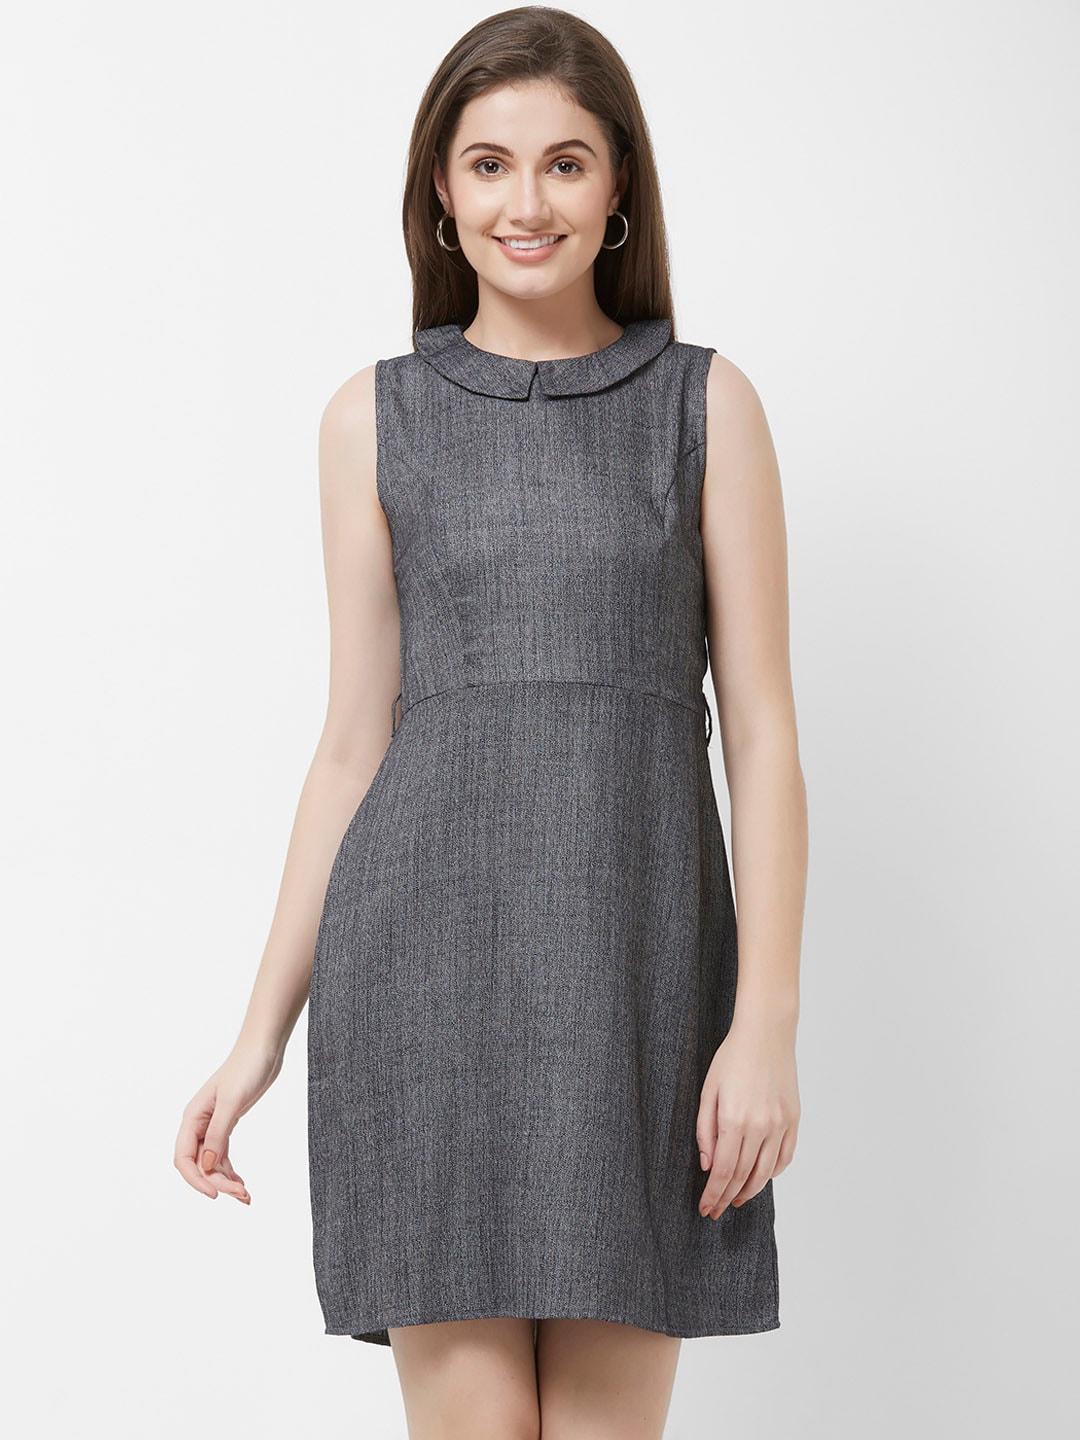 109f-women-grey-solid-a-line-dress